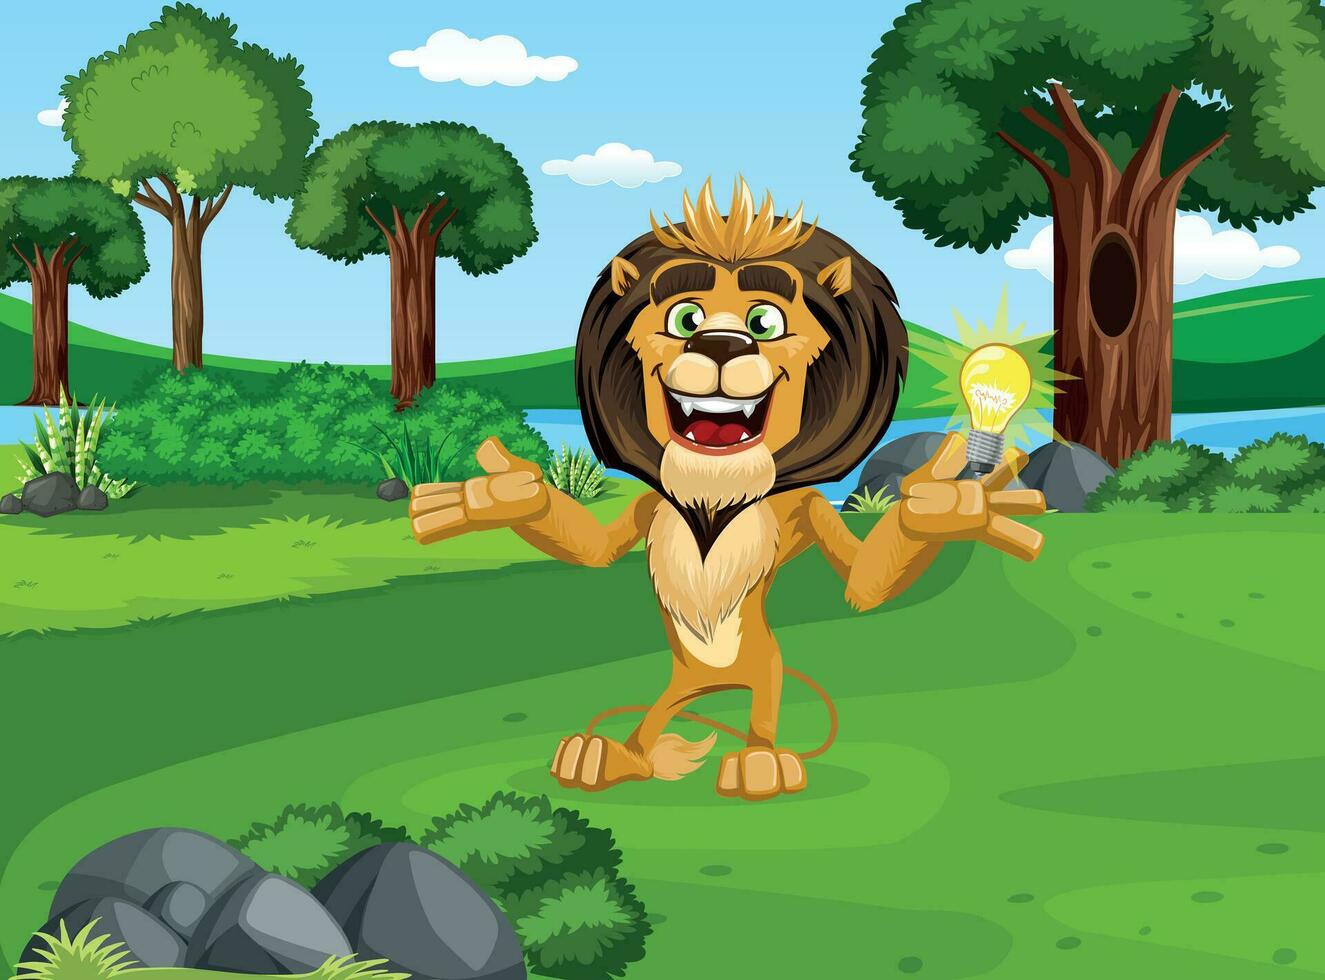 djungel kung lejon tecknad serie arbete vektor